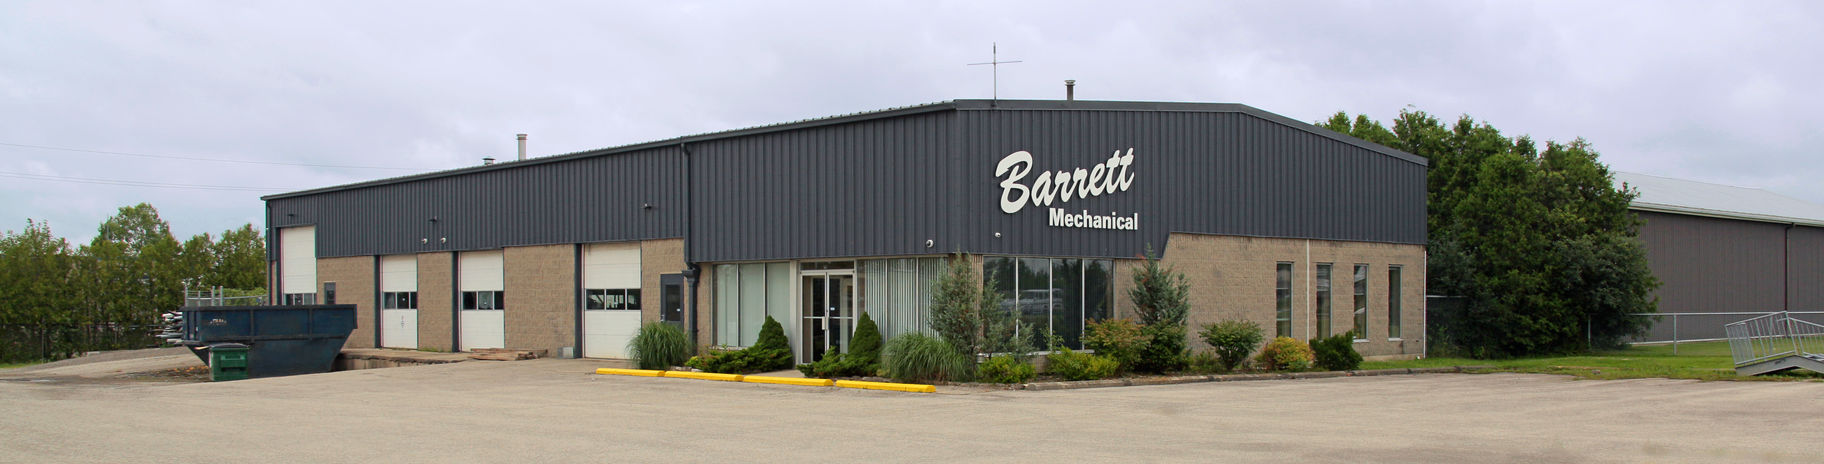 Barrett Mechanical - Mechanical Plumbing Specialists in London Ontario.